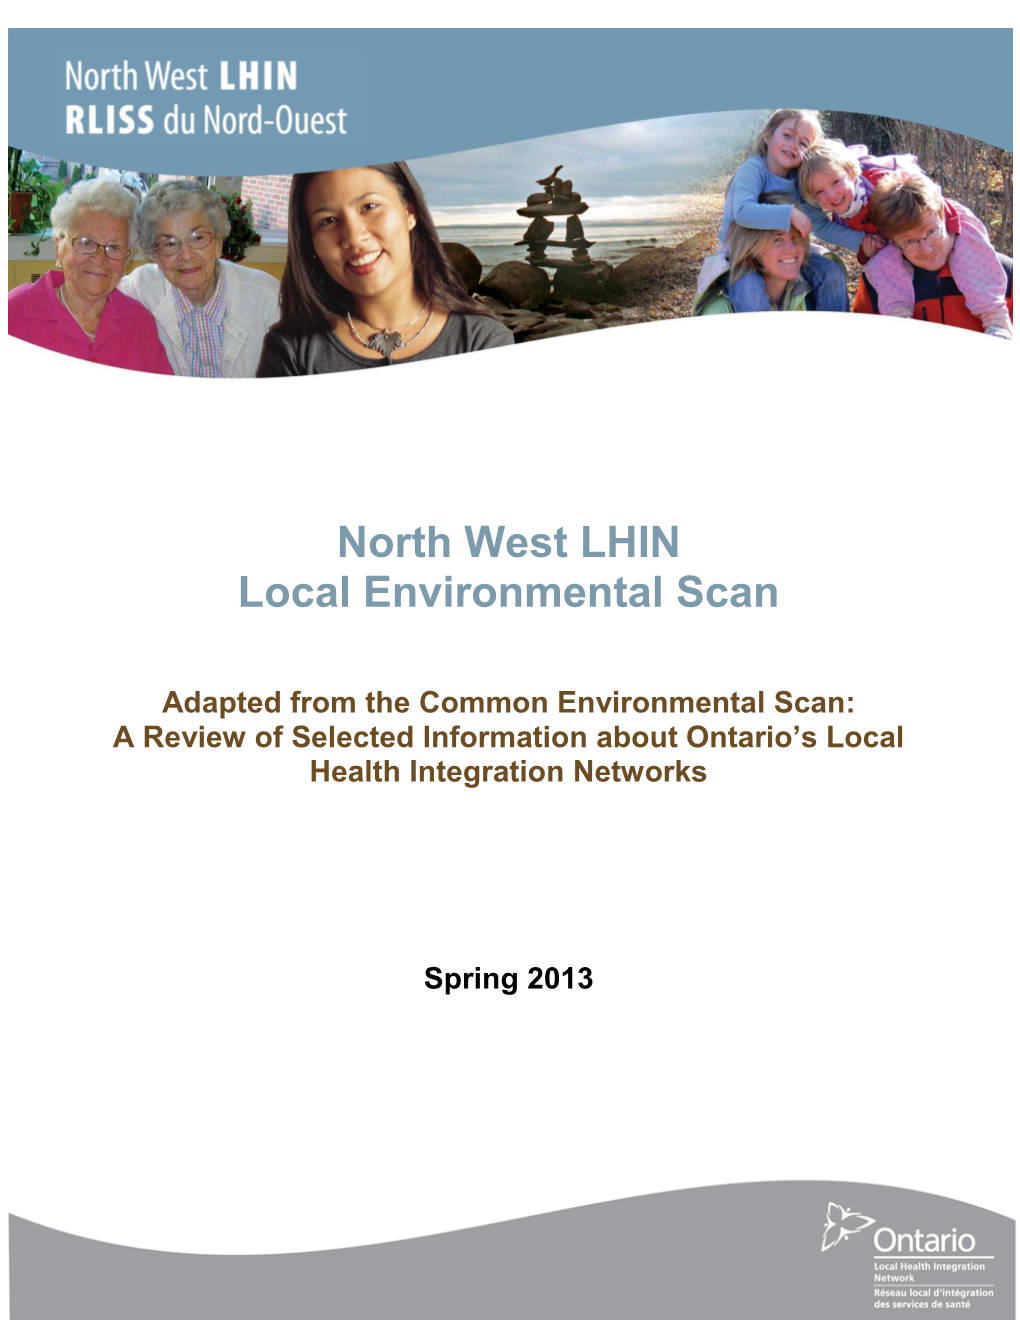 North West LHIN Local Environmental Scan 2013